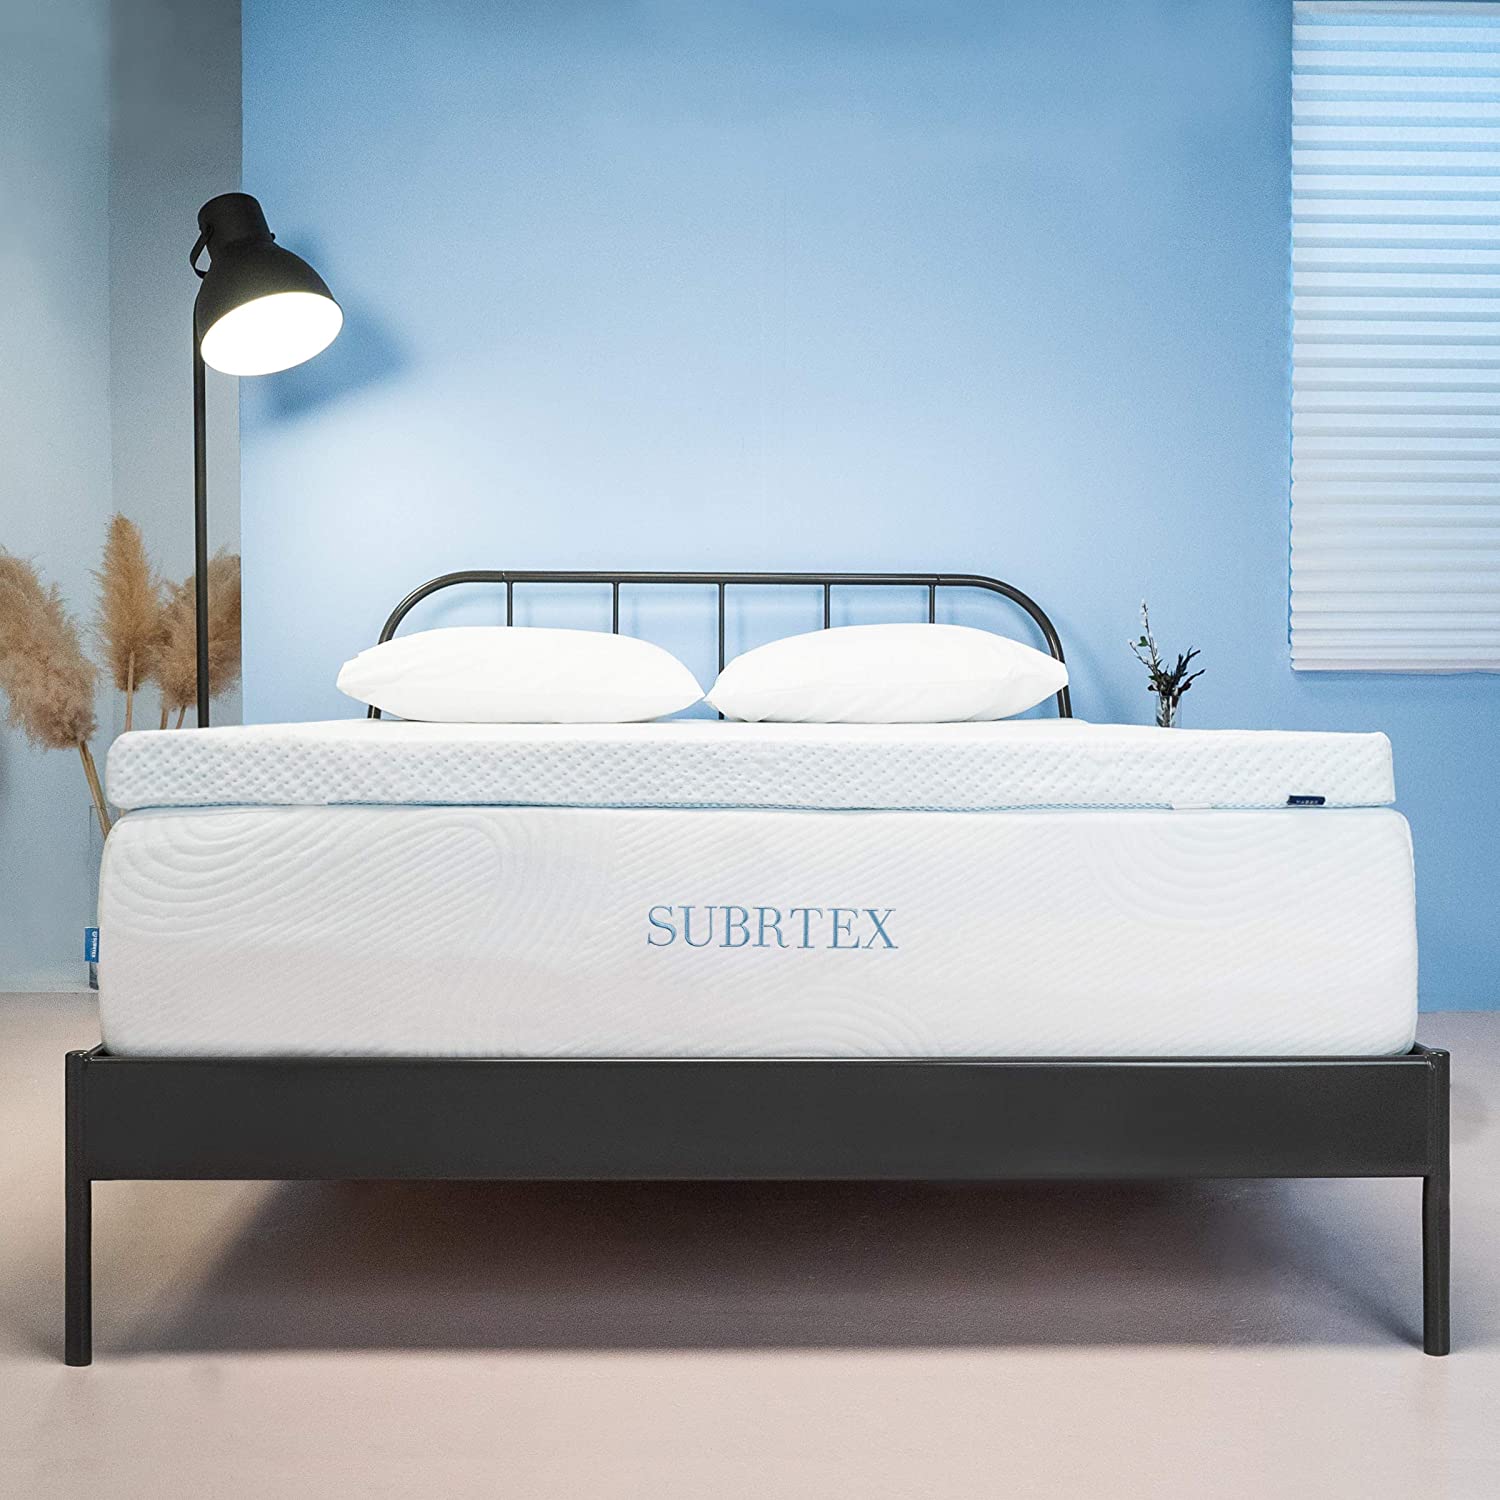 Subrtex 2-inch Gel-Infused Memory Foam mattress topper